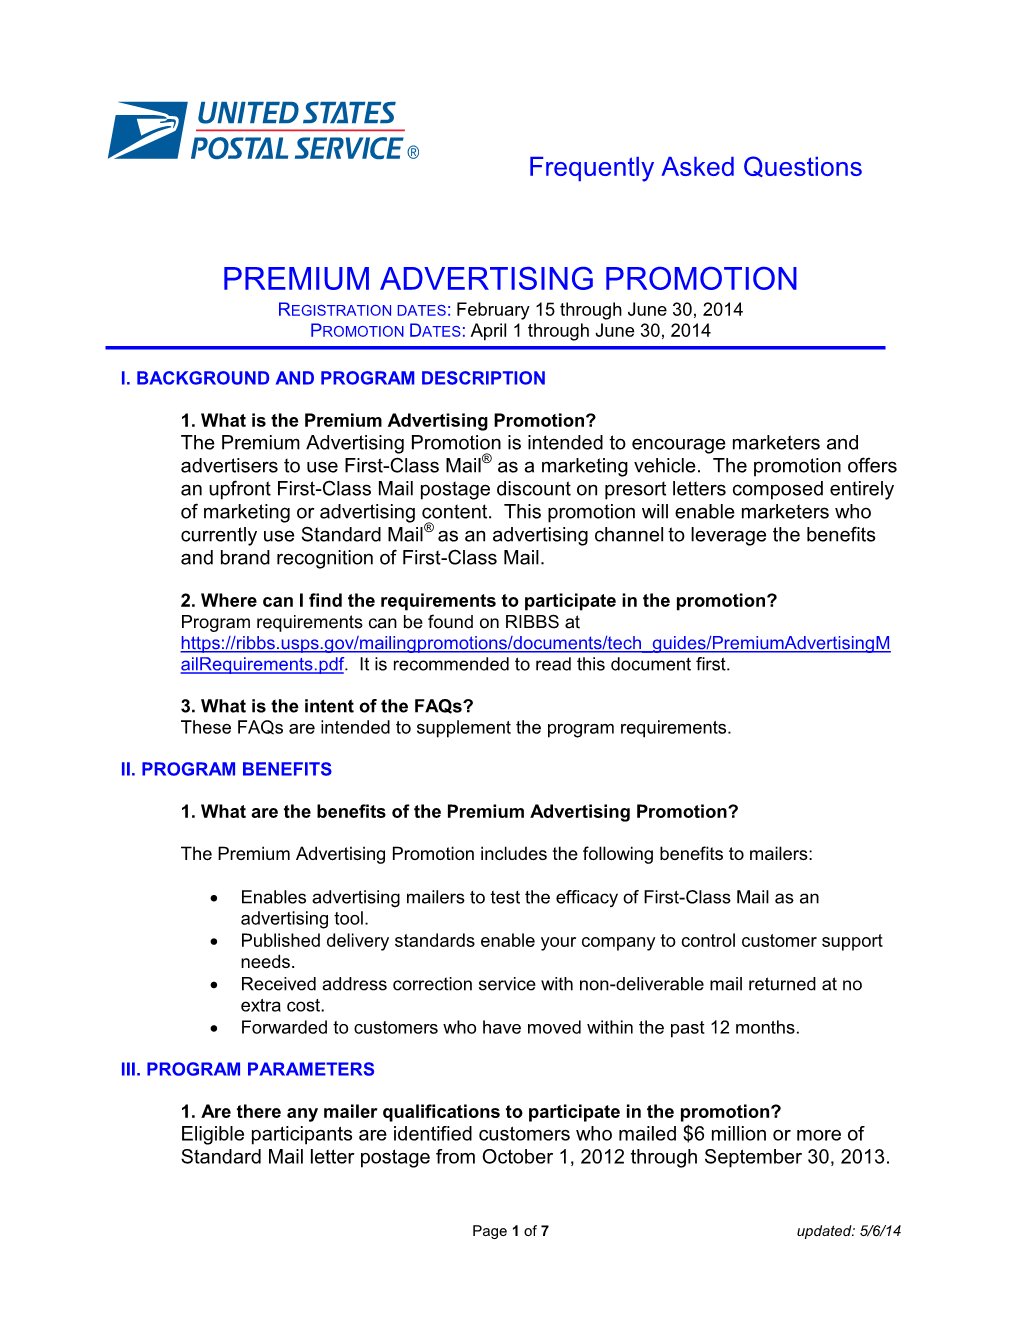 PREMIUM ADVERTISING PROMOTION REGISTRATION DATES: February 15 Through June 30, 2014 PROMOTION DATES: April 1 Through June 30, 2014